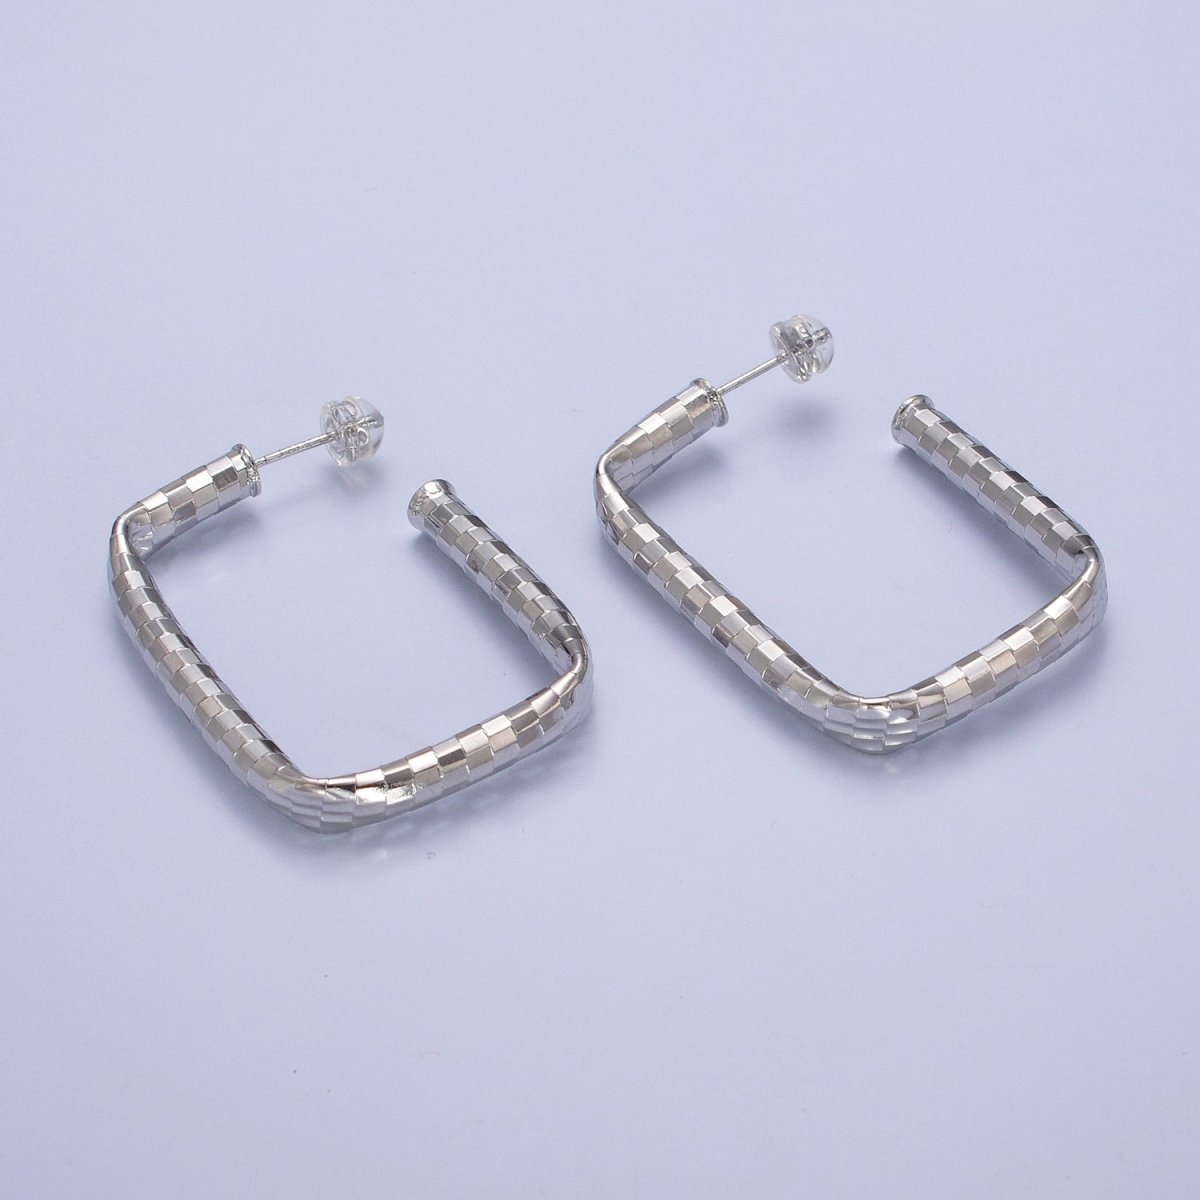 Checkered Hoop Earrings, Minimalist Gold Hoop Earrings, Stylish Silver Rectangle Hoop Earring T-409 T-410 - DLUXCA